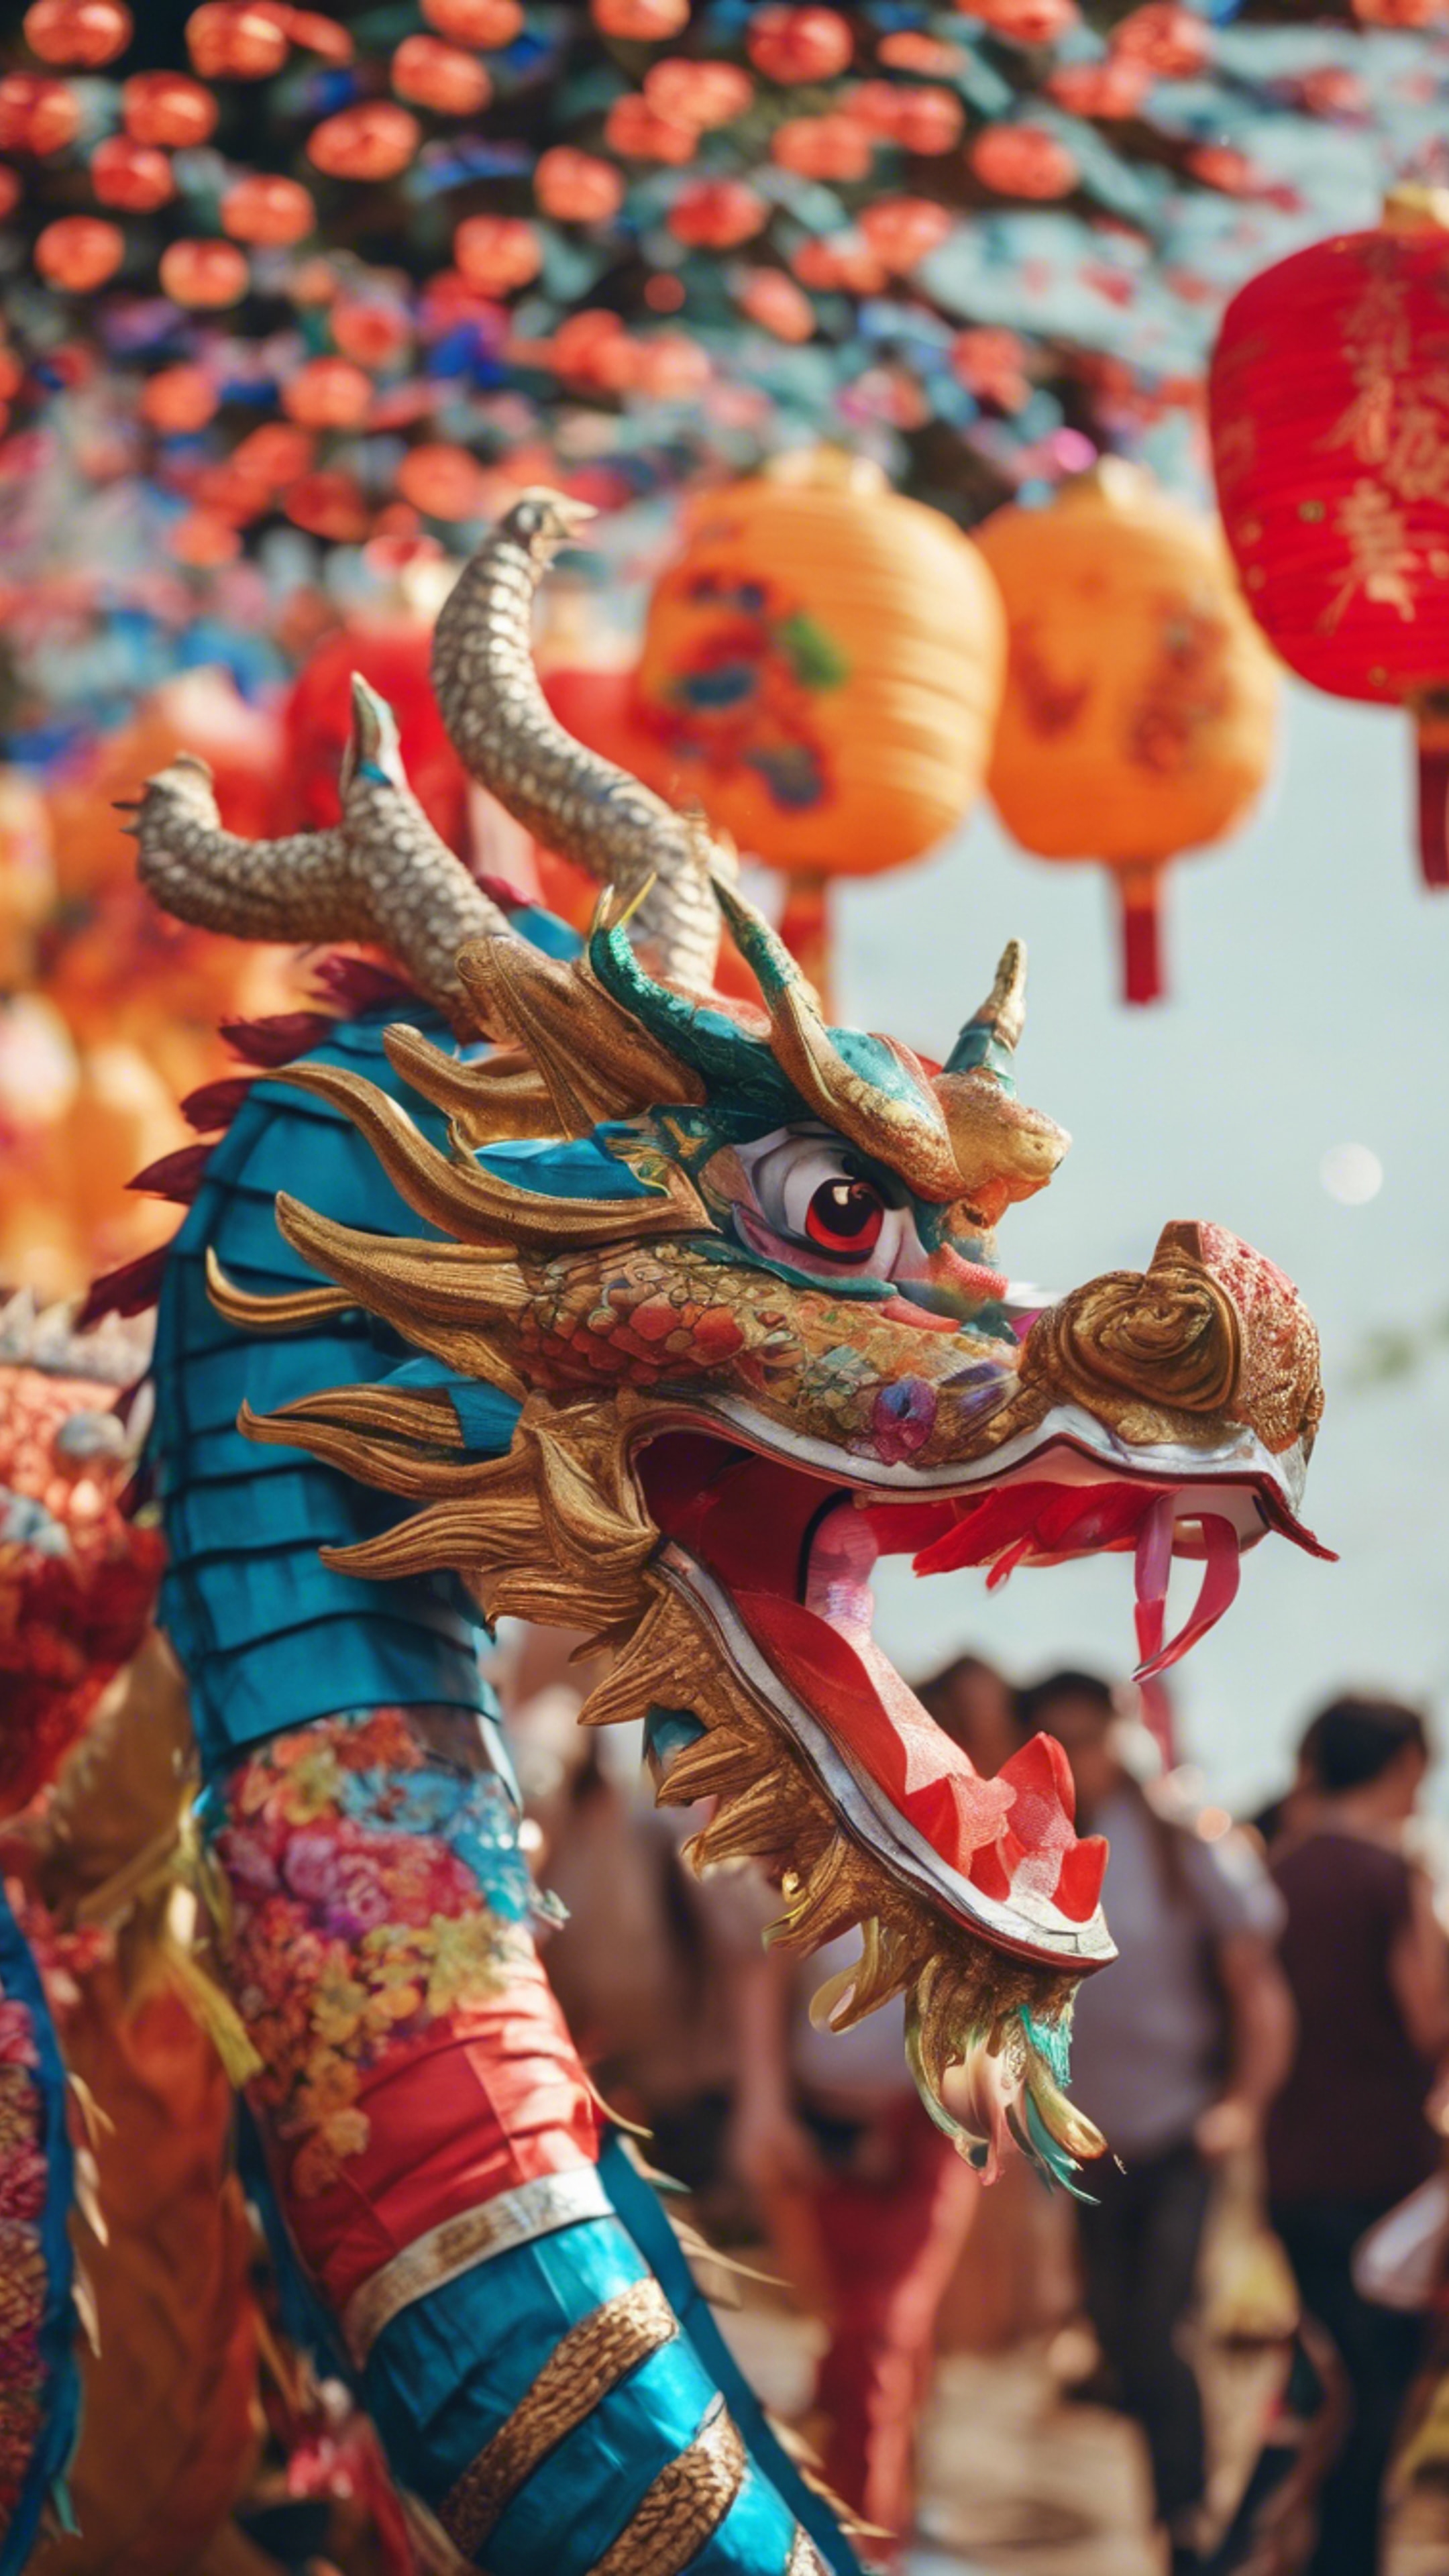 An oriental-style dragon parading amidst a colorful festival with paper lanterns. Tapeta[5877da5b29174274b3e8]